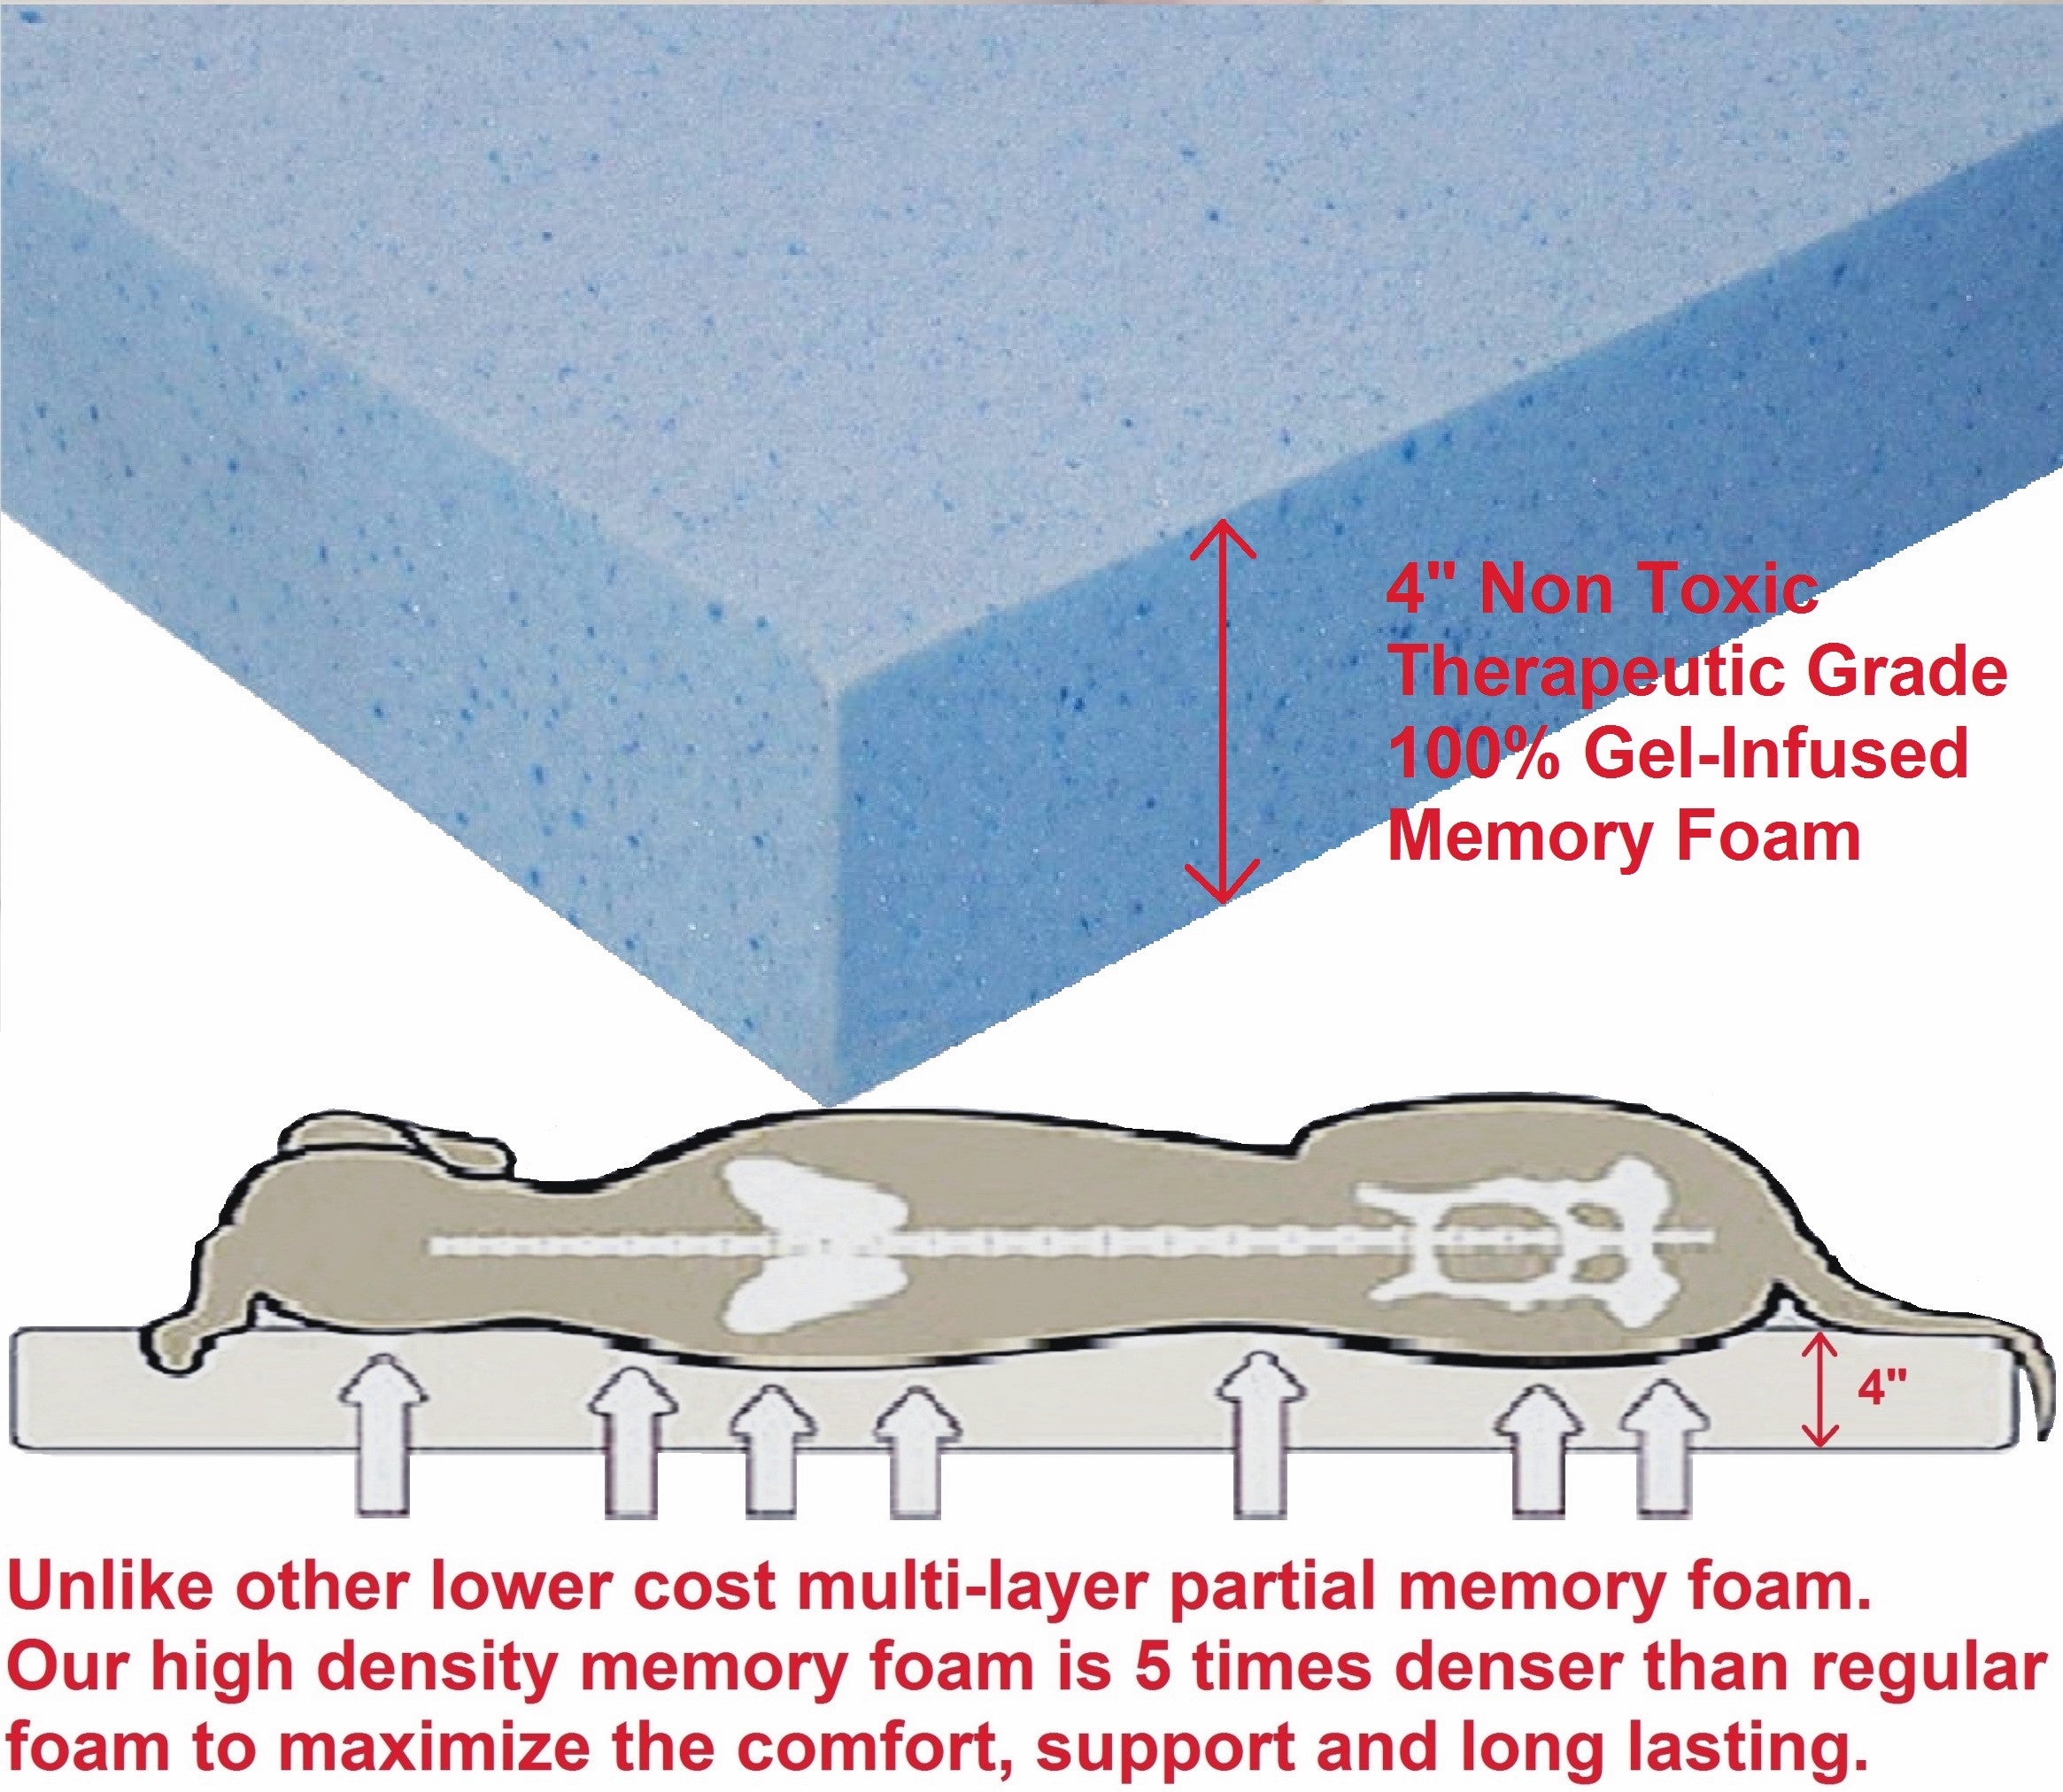 XL memory foam dog bed